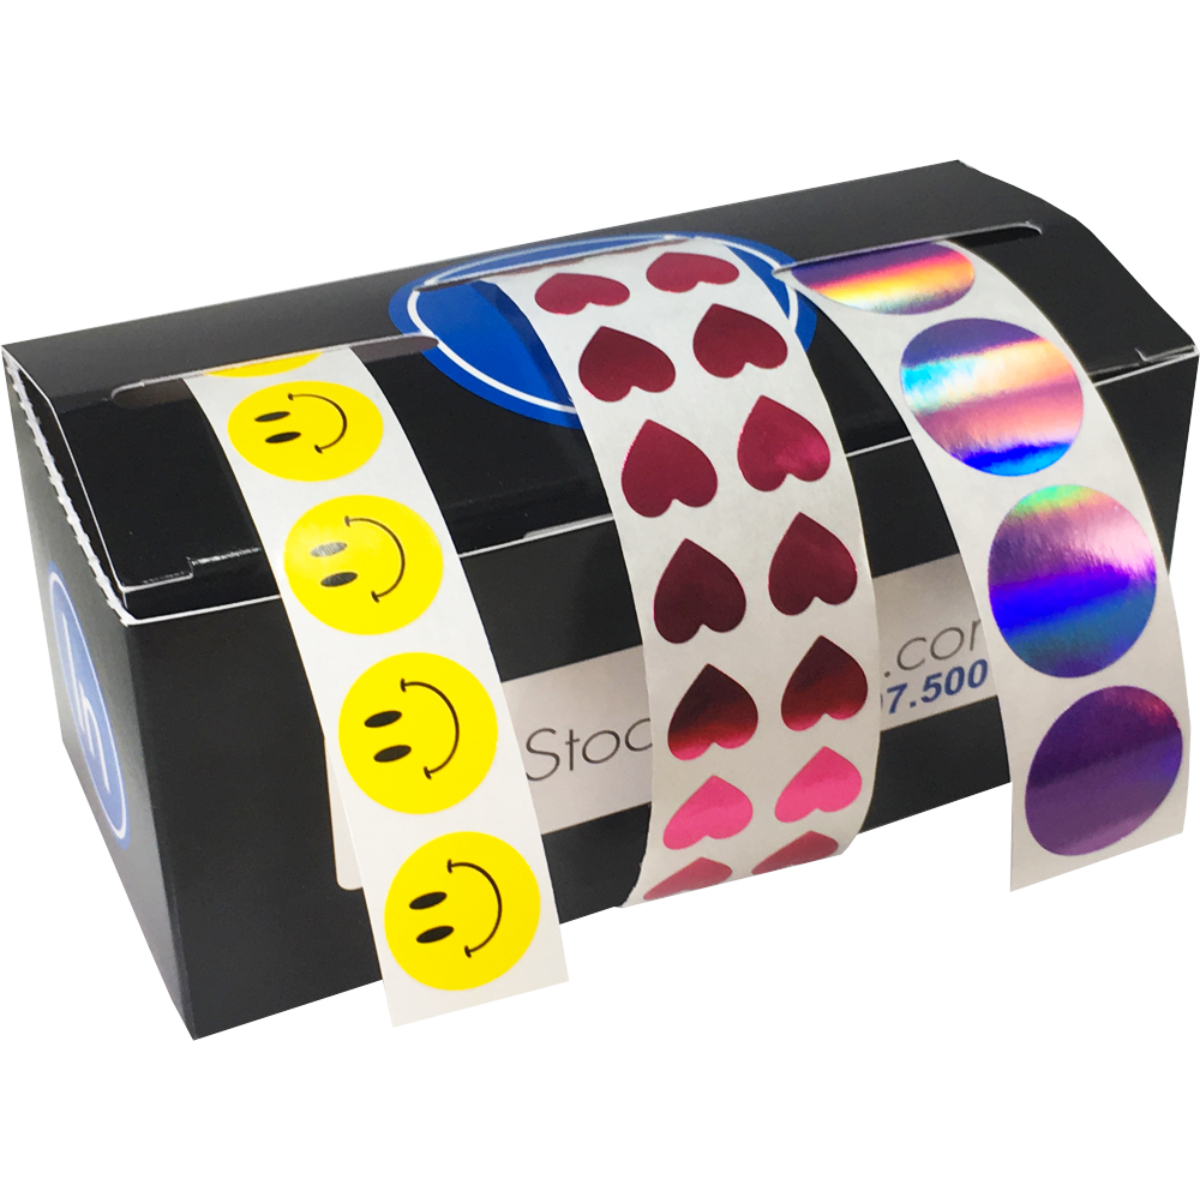 Sticker Roll Dispenser, Excell Inc.Best Sticker Roll Holder